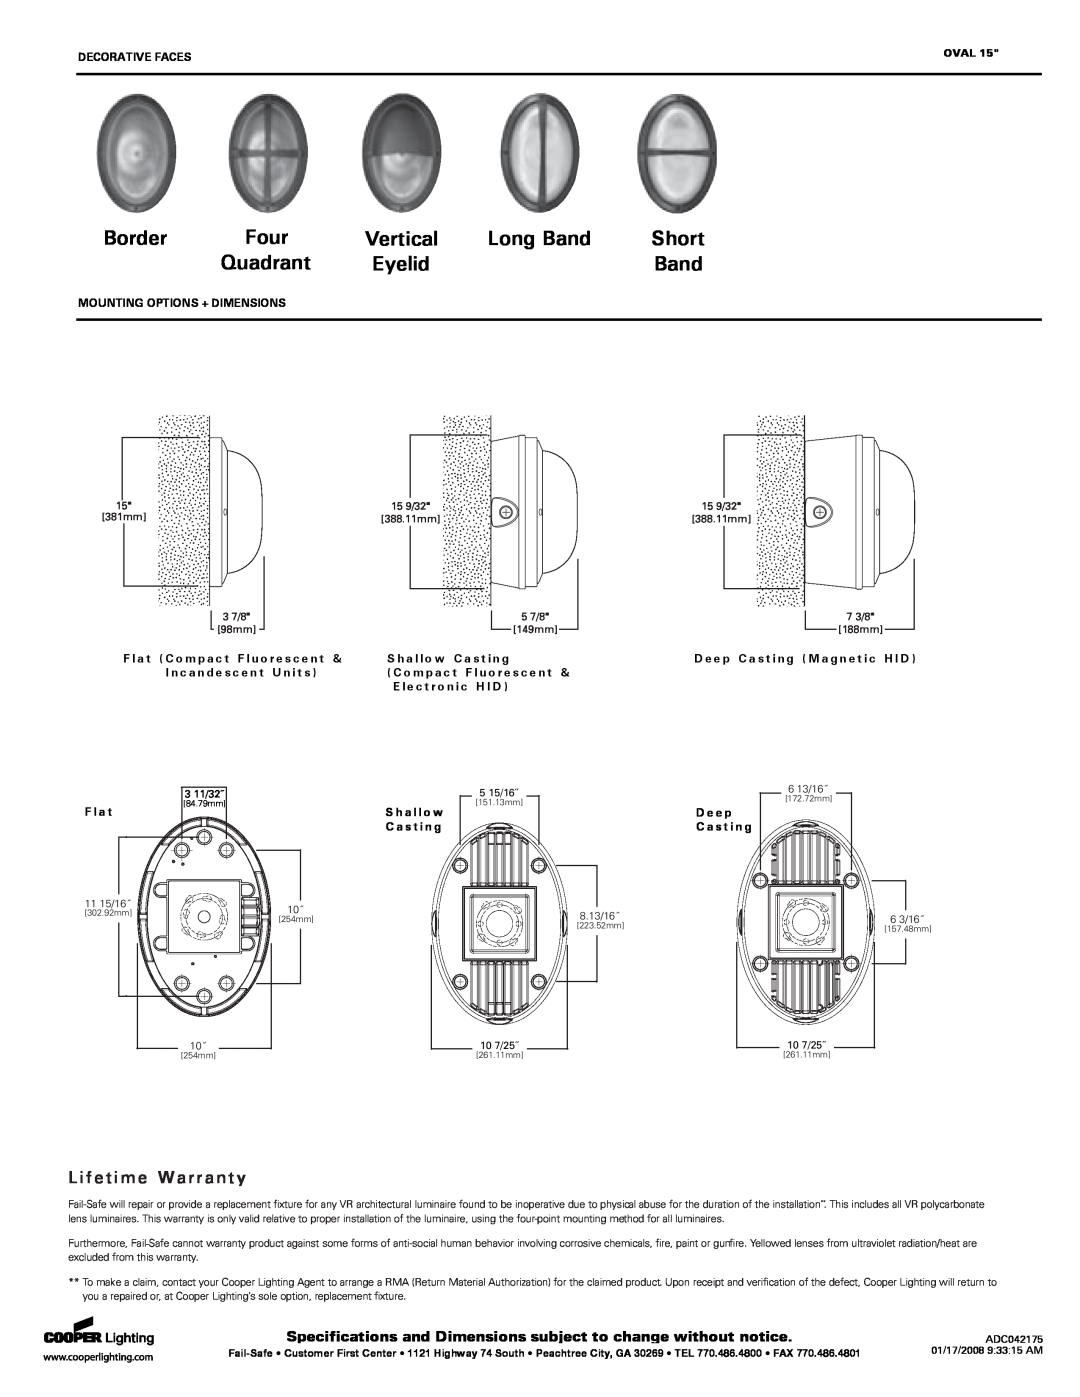 Cooper Lighting Oval Series L i f e t i m e Warranty, Border, Long Band, Four, Vertical, Short, Quadrant, Eyelid, F l a t 